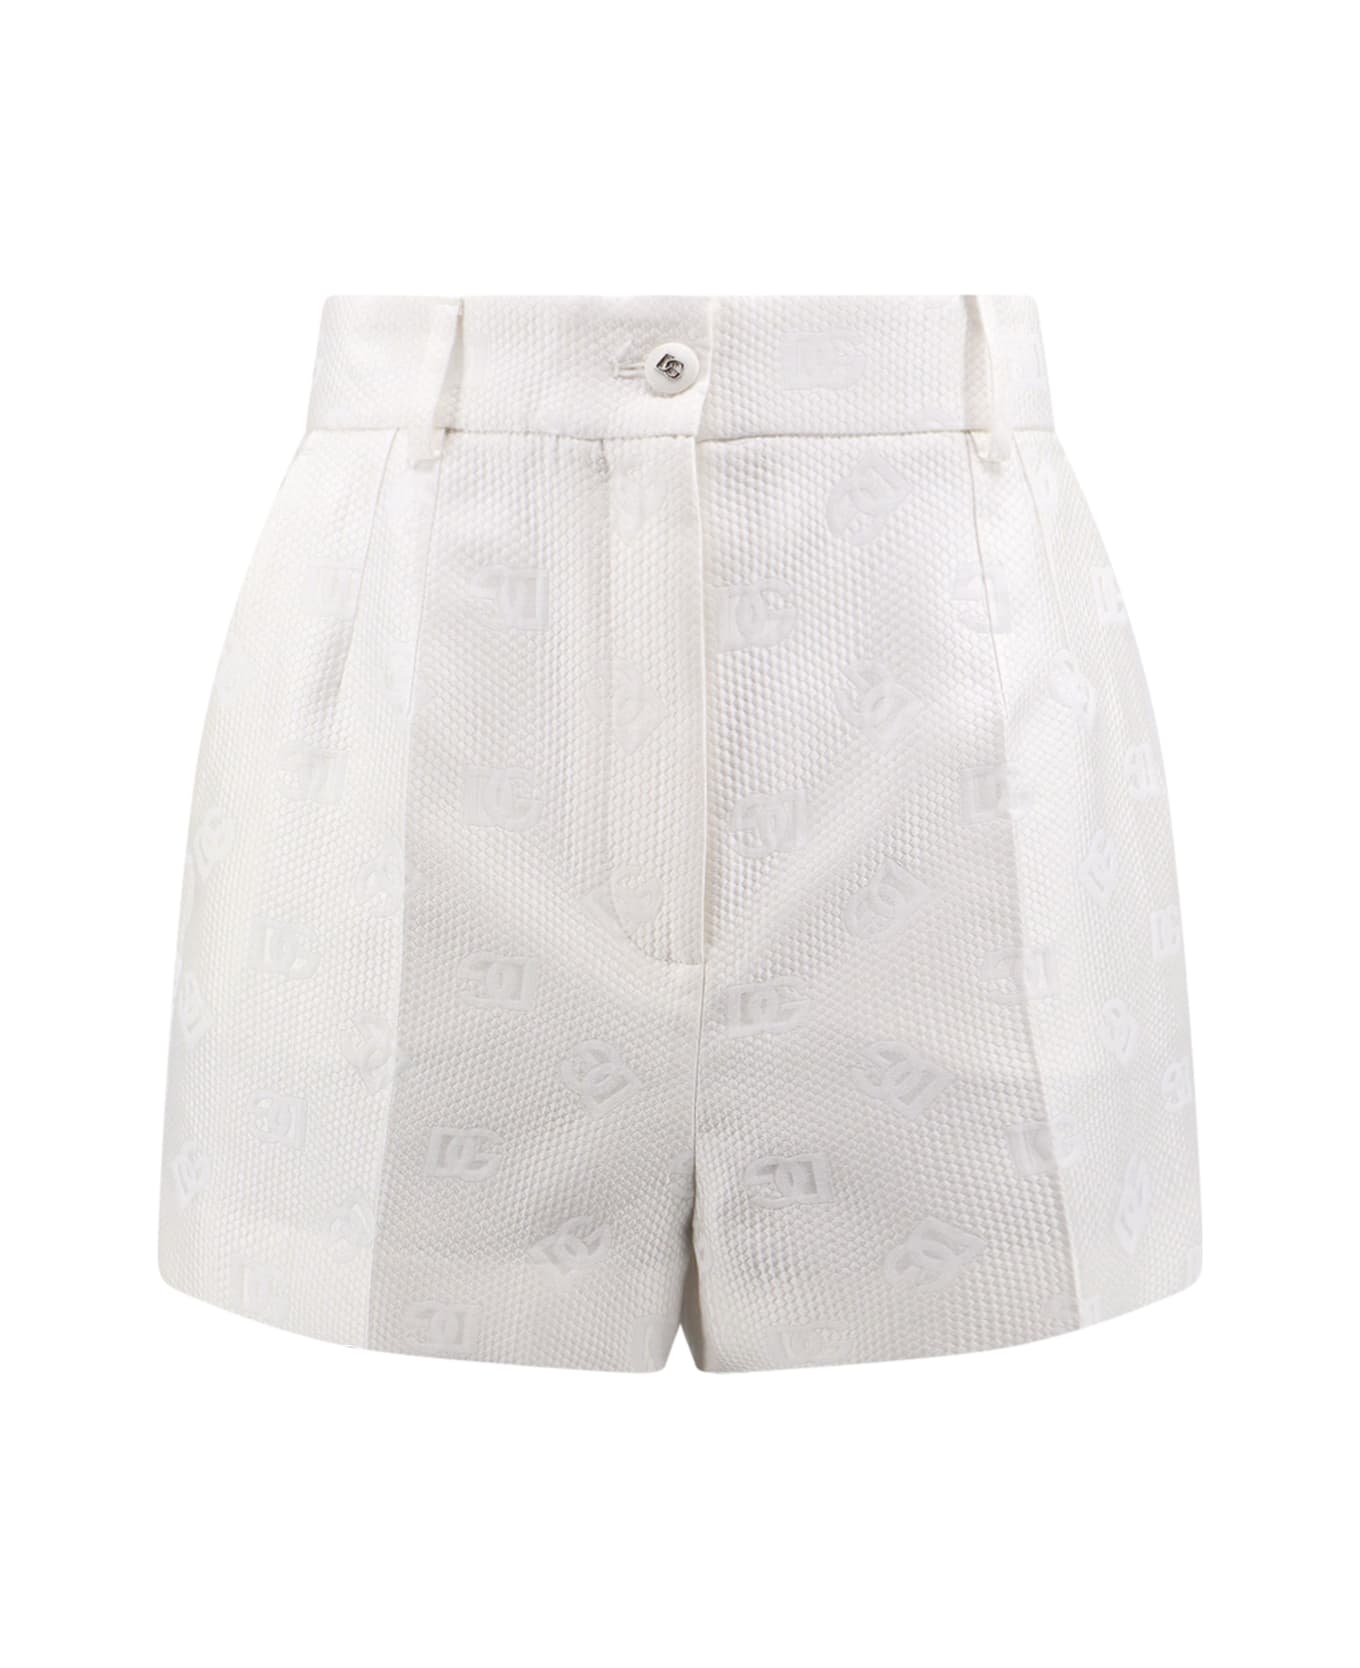 Dolce pattern & Gabbana Shorts - White